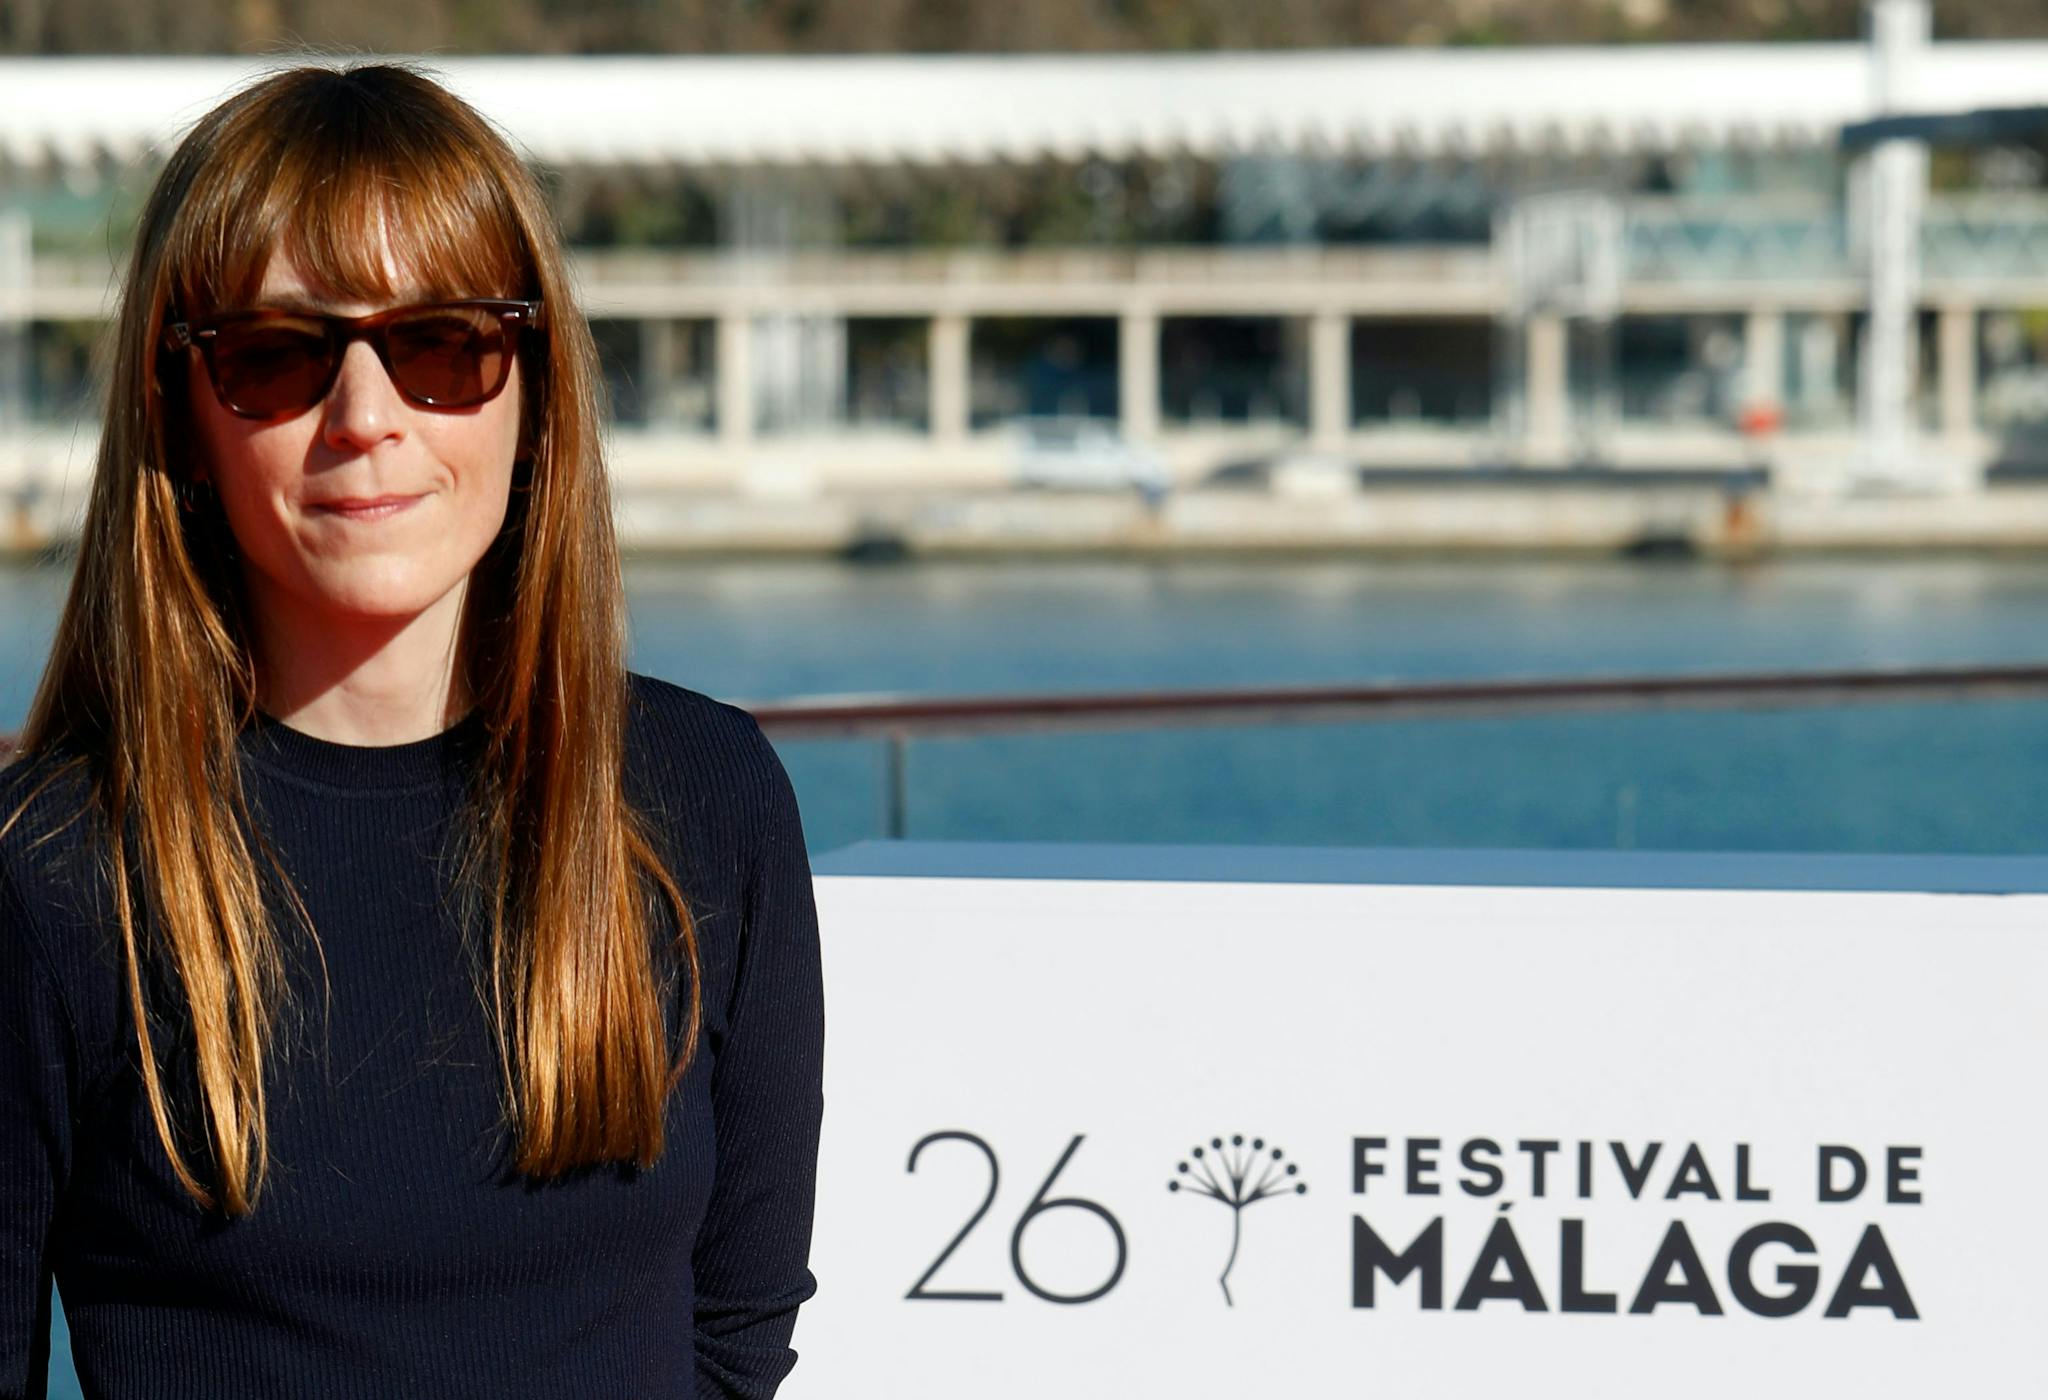 La directora Elena Trapé presenta su película 'Els encantats' en el Festival de Málaga 2023